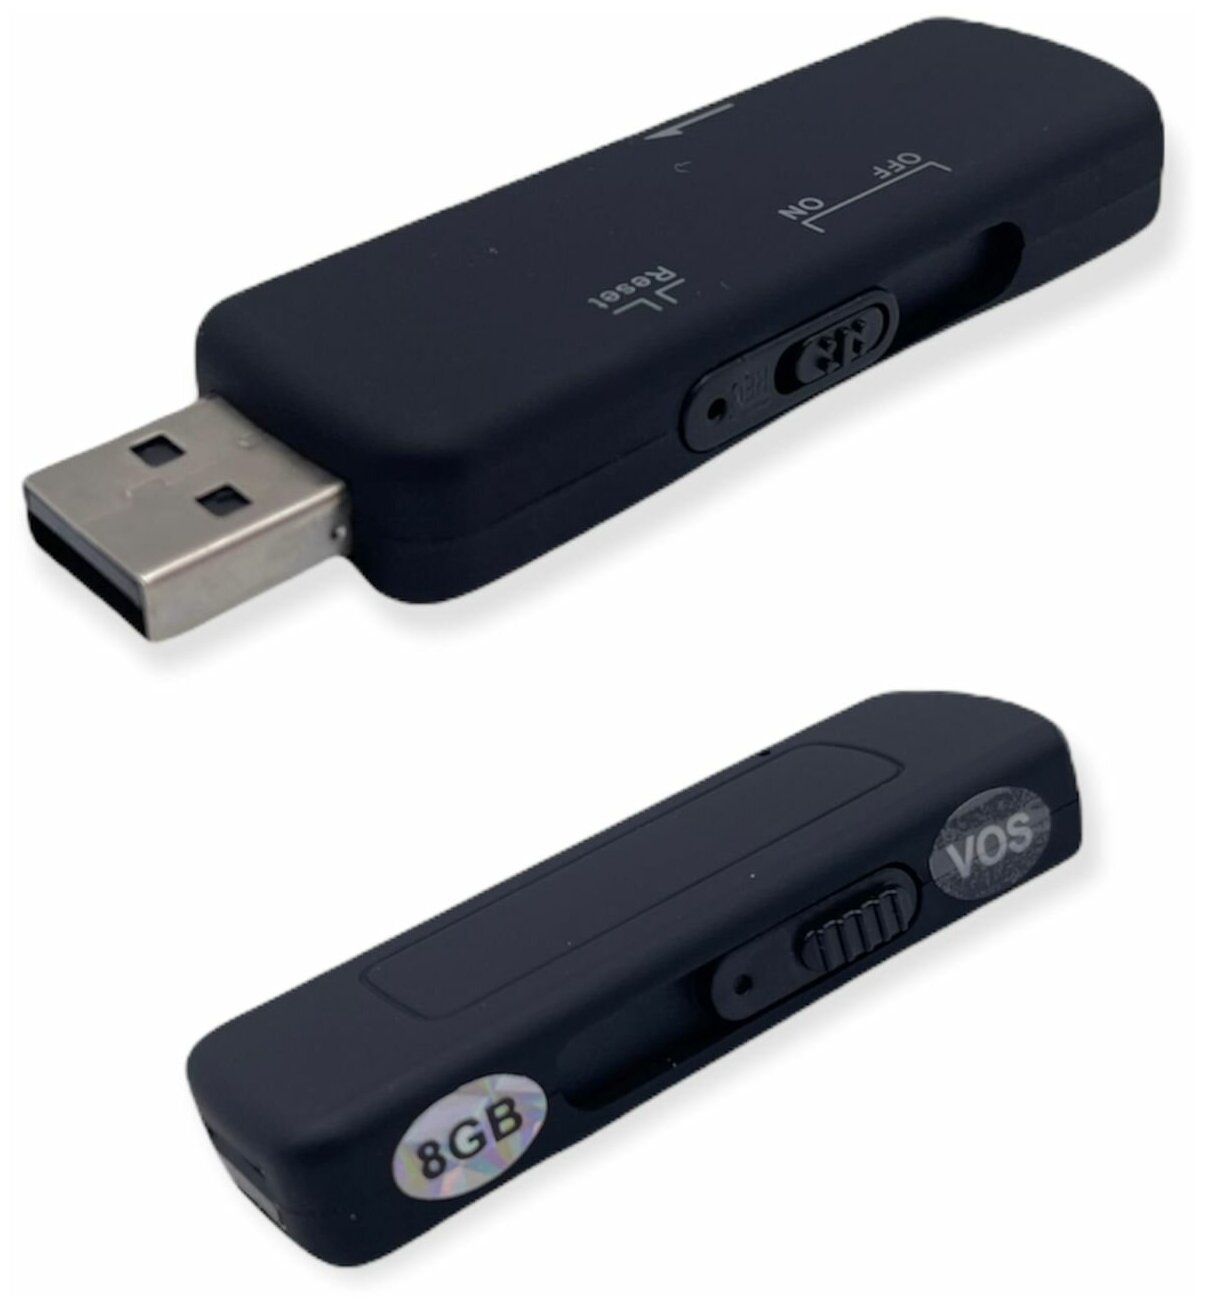 8 GB портативный диктофон VR-8 VOS USB 20 FLASH DRIVE запись по датчику звука/ USB voice recorder/ диктофон / диктофон флешка